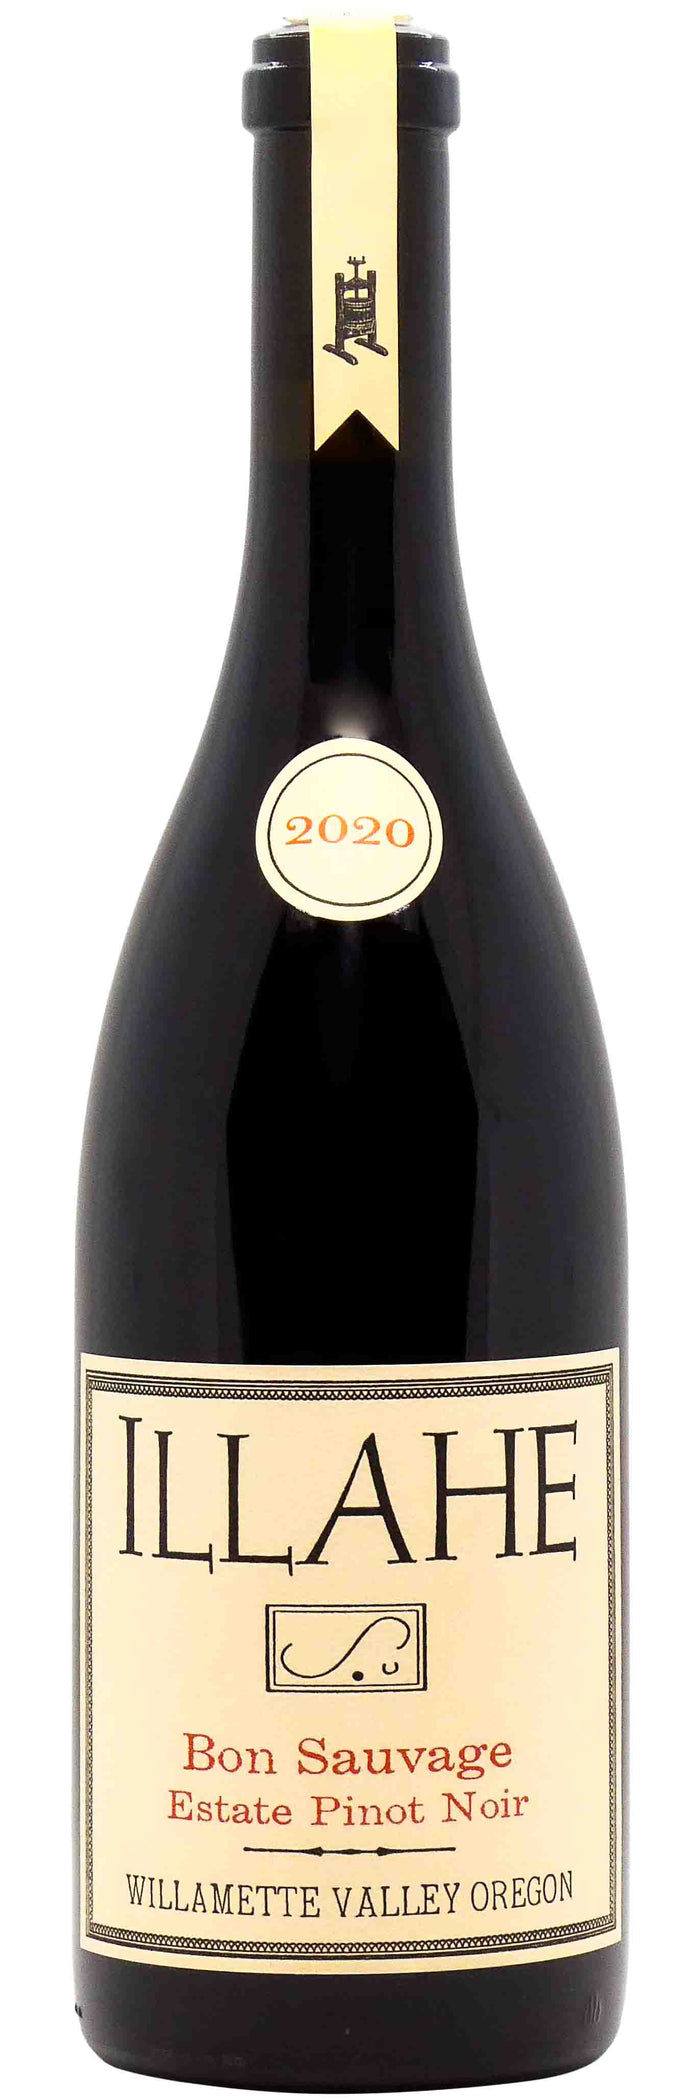 Illahe Pinot Noir Bon Sauvage 2020